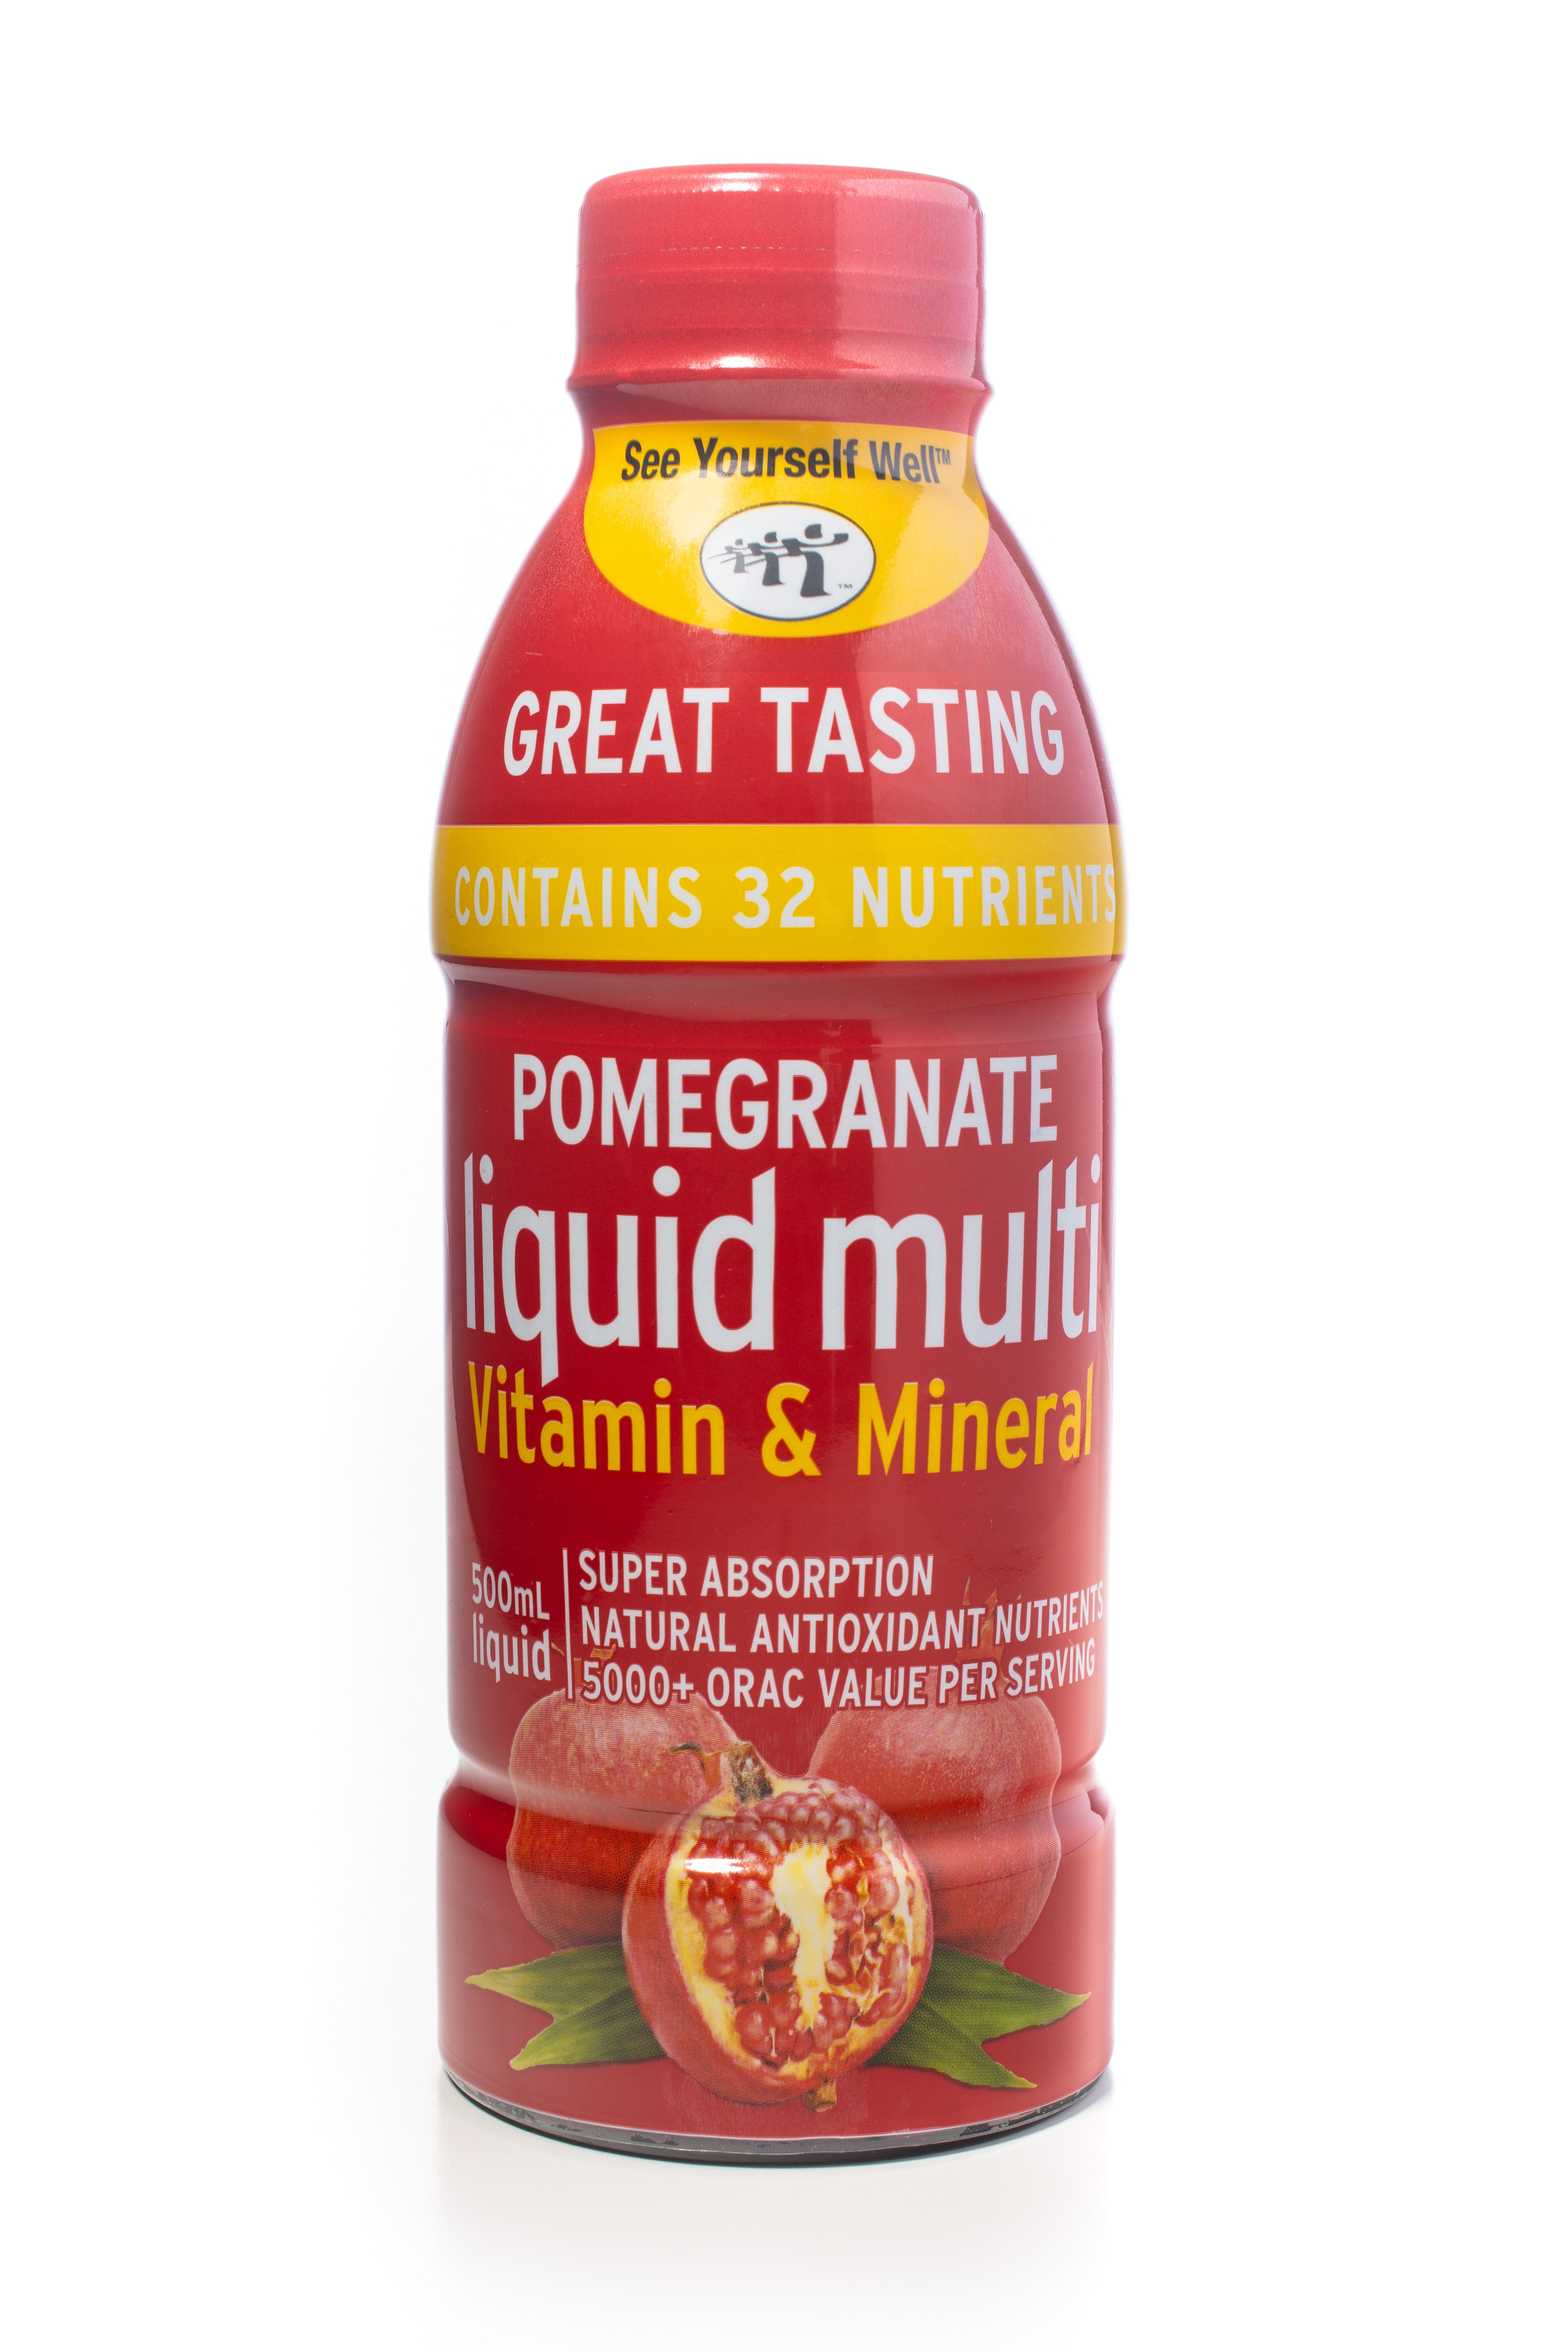 See Yourself Well Pomegranate Liquid Multi